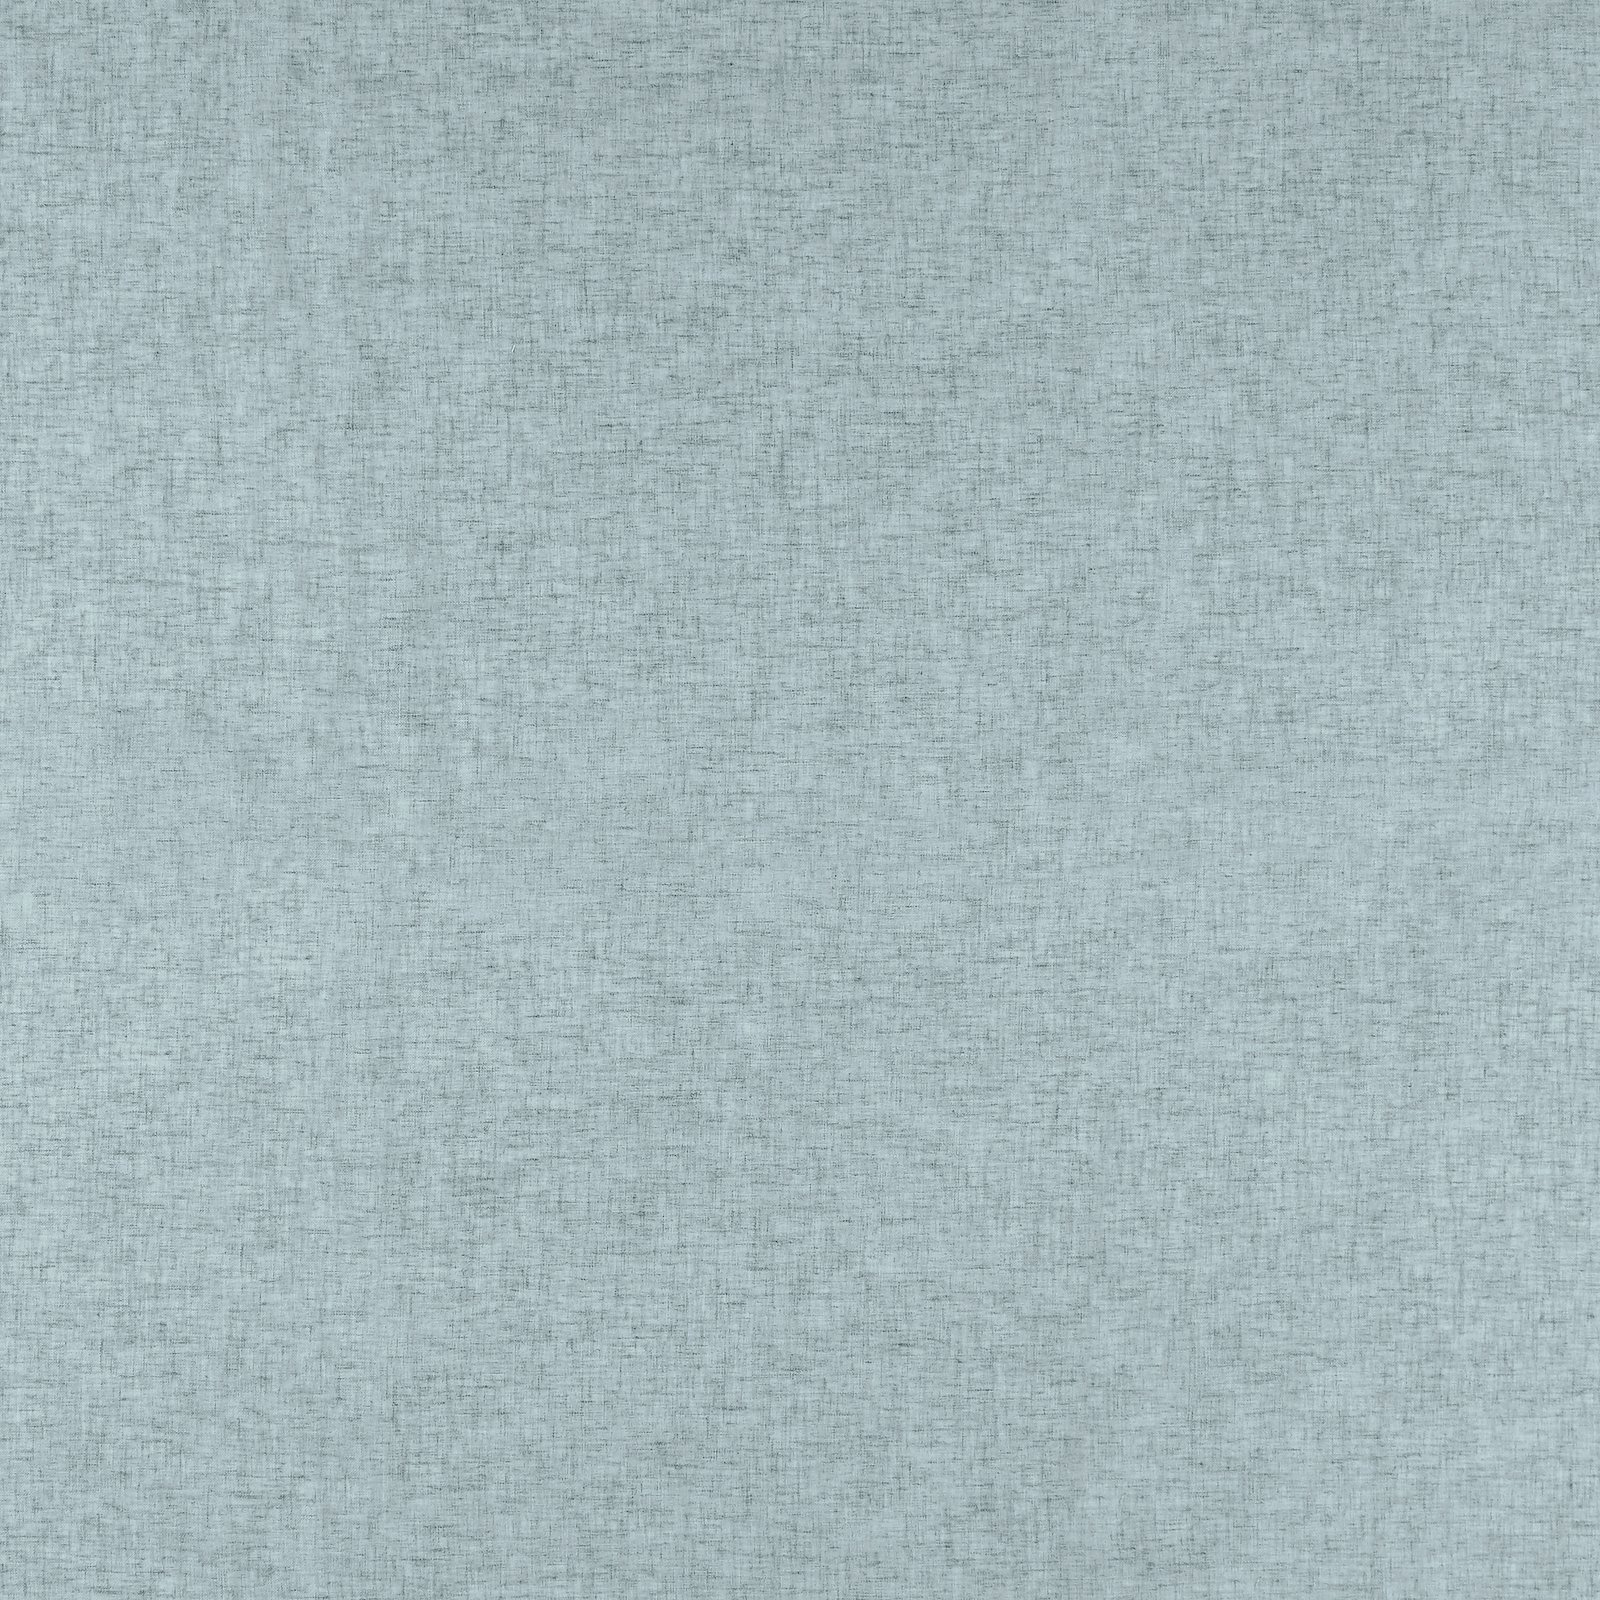 Voile blue grey polyester/linen blend 835186_pack_solid